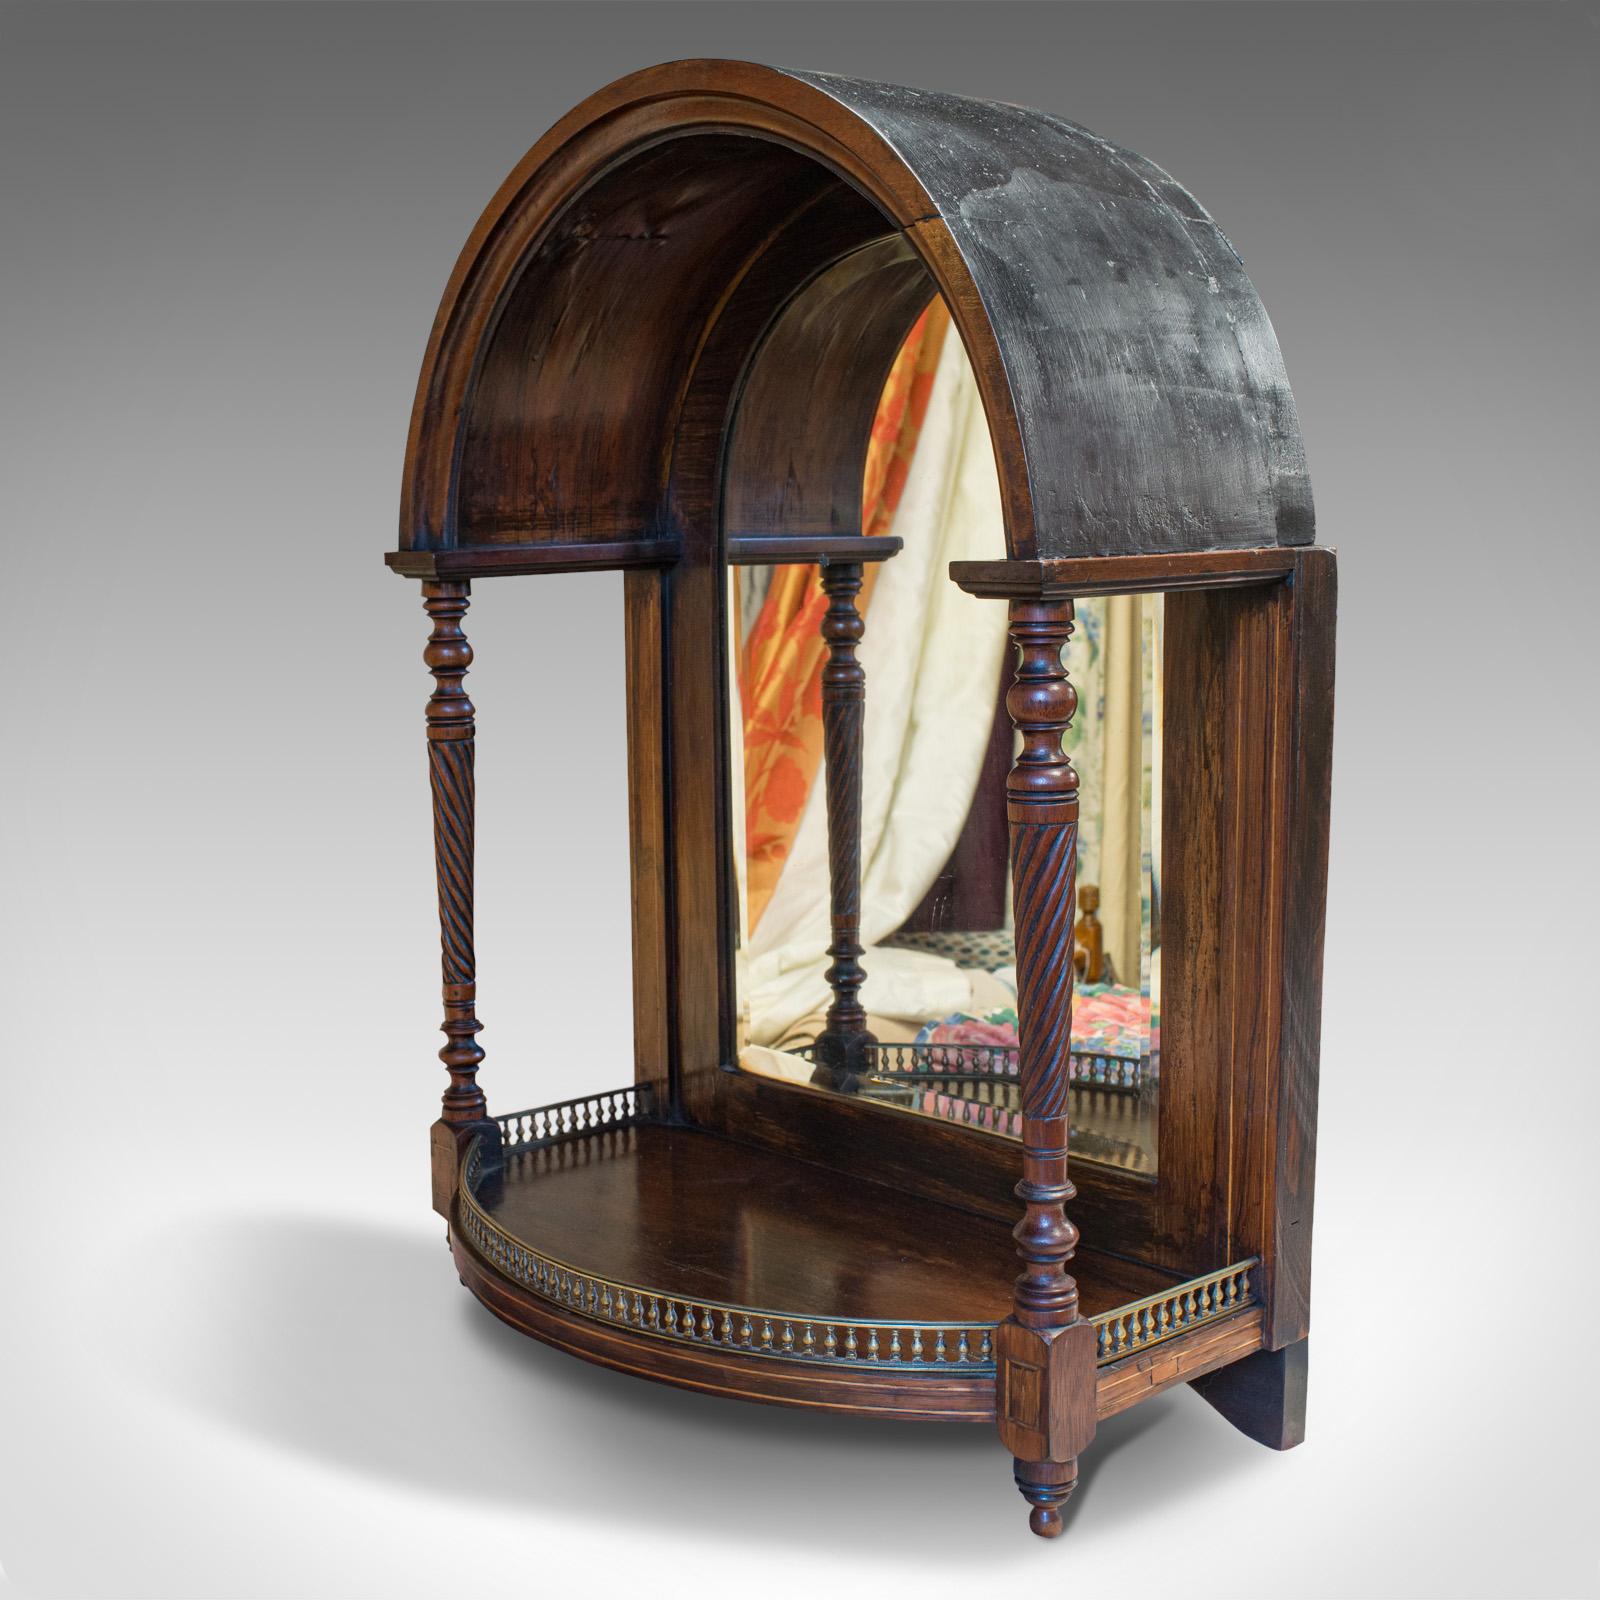 British Antique Butler's Mirror, English, Rosewood, Dome Top, Wall, Victorian circa 1880